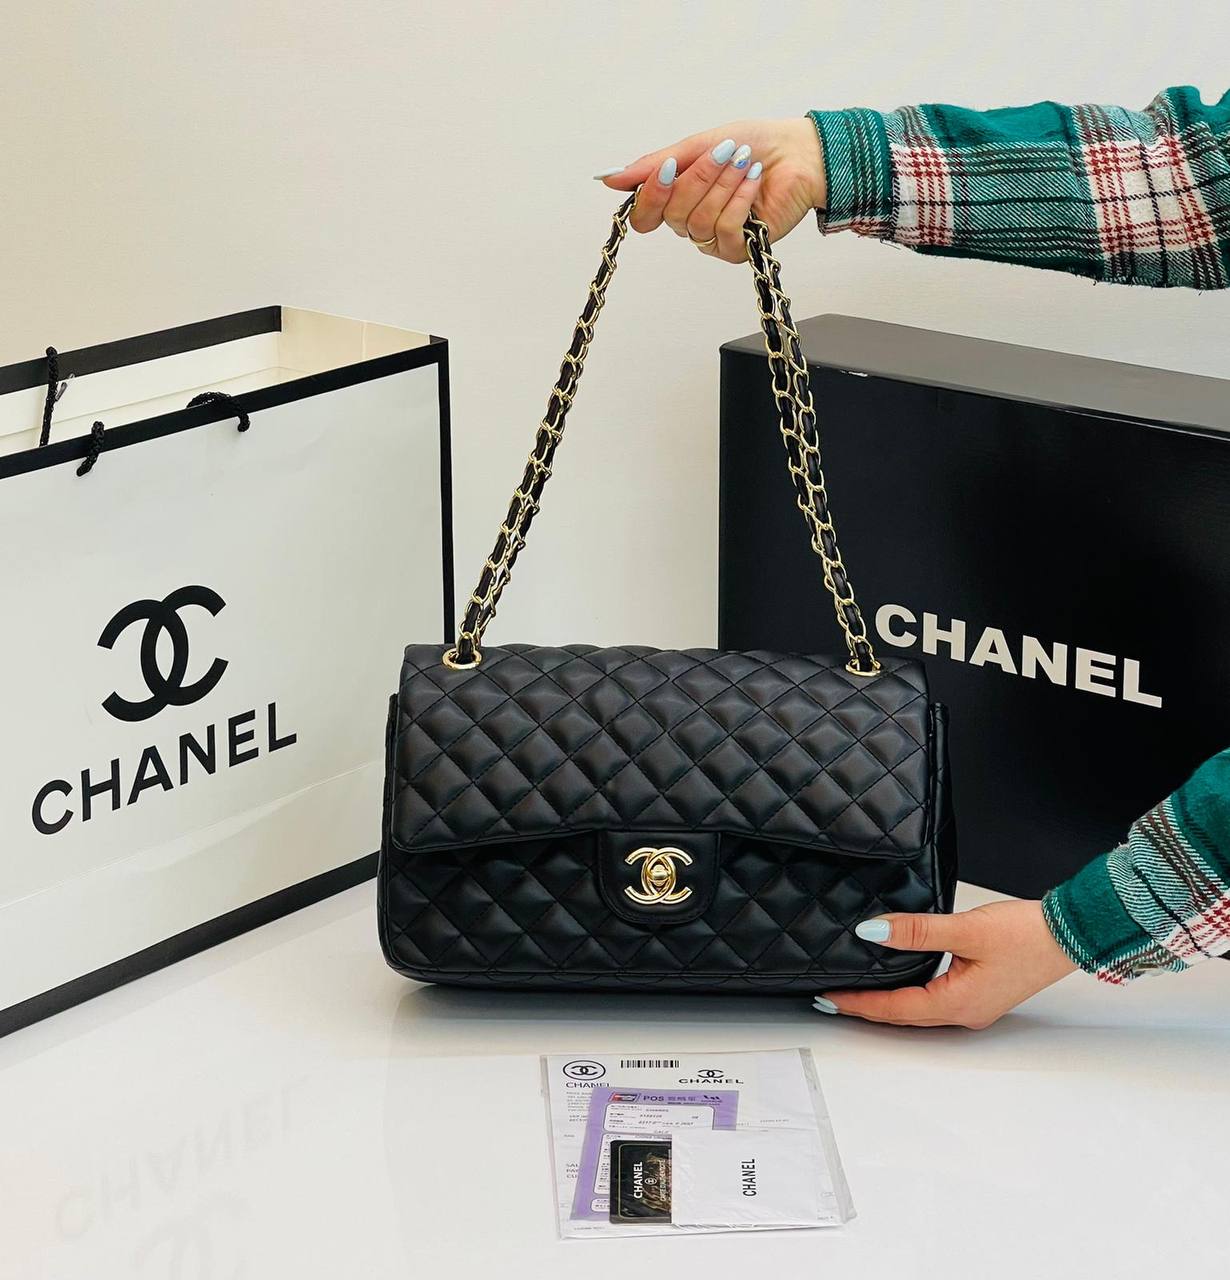 Chanel leather handbags